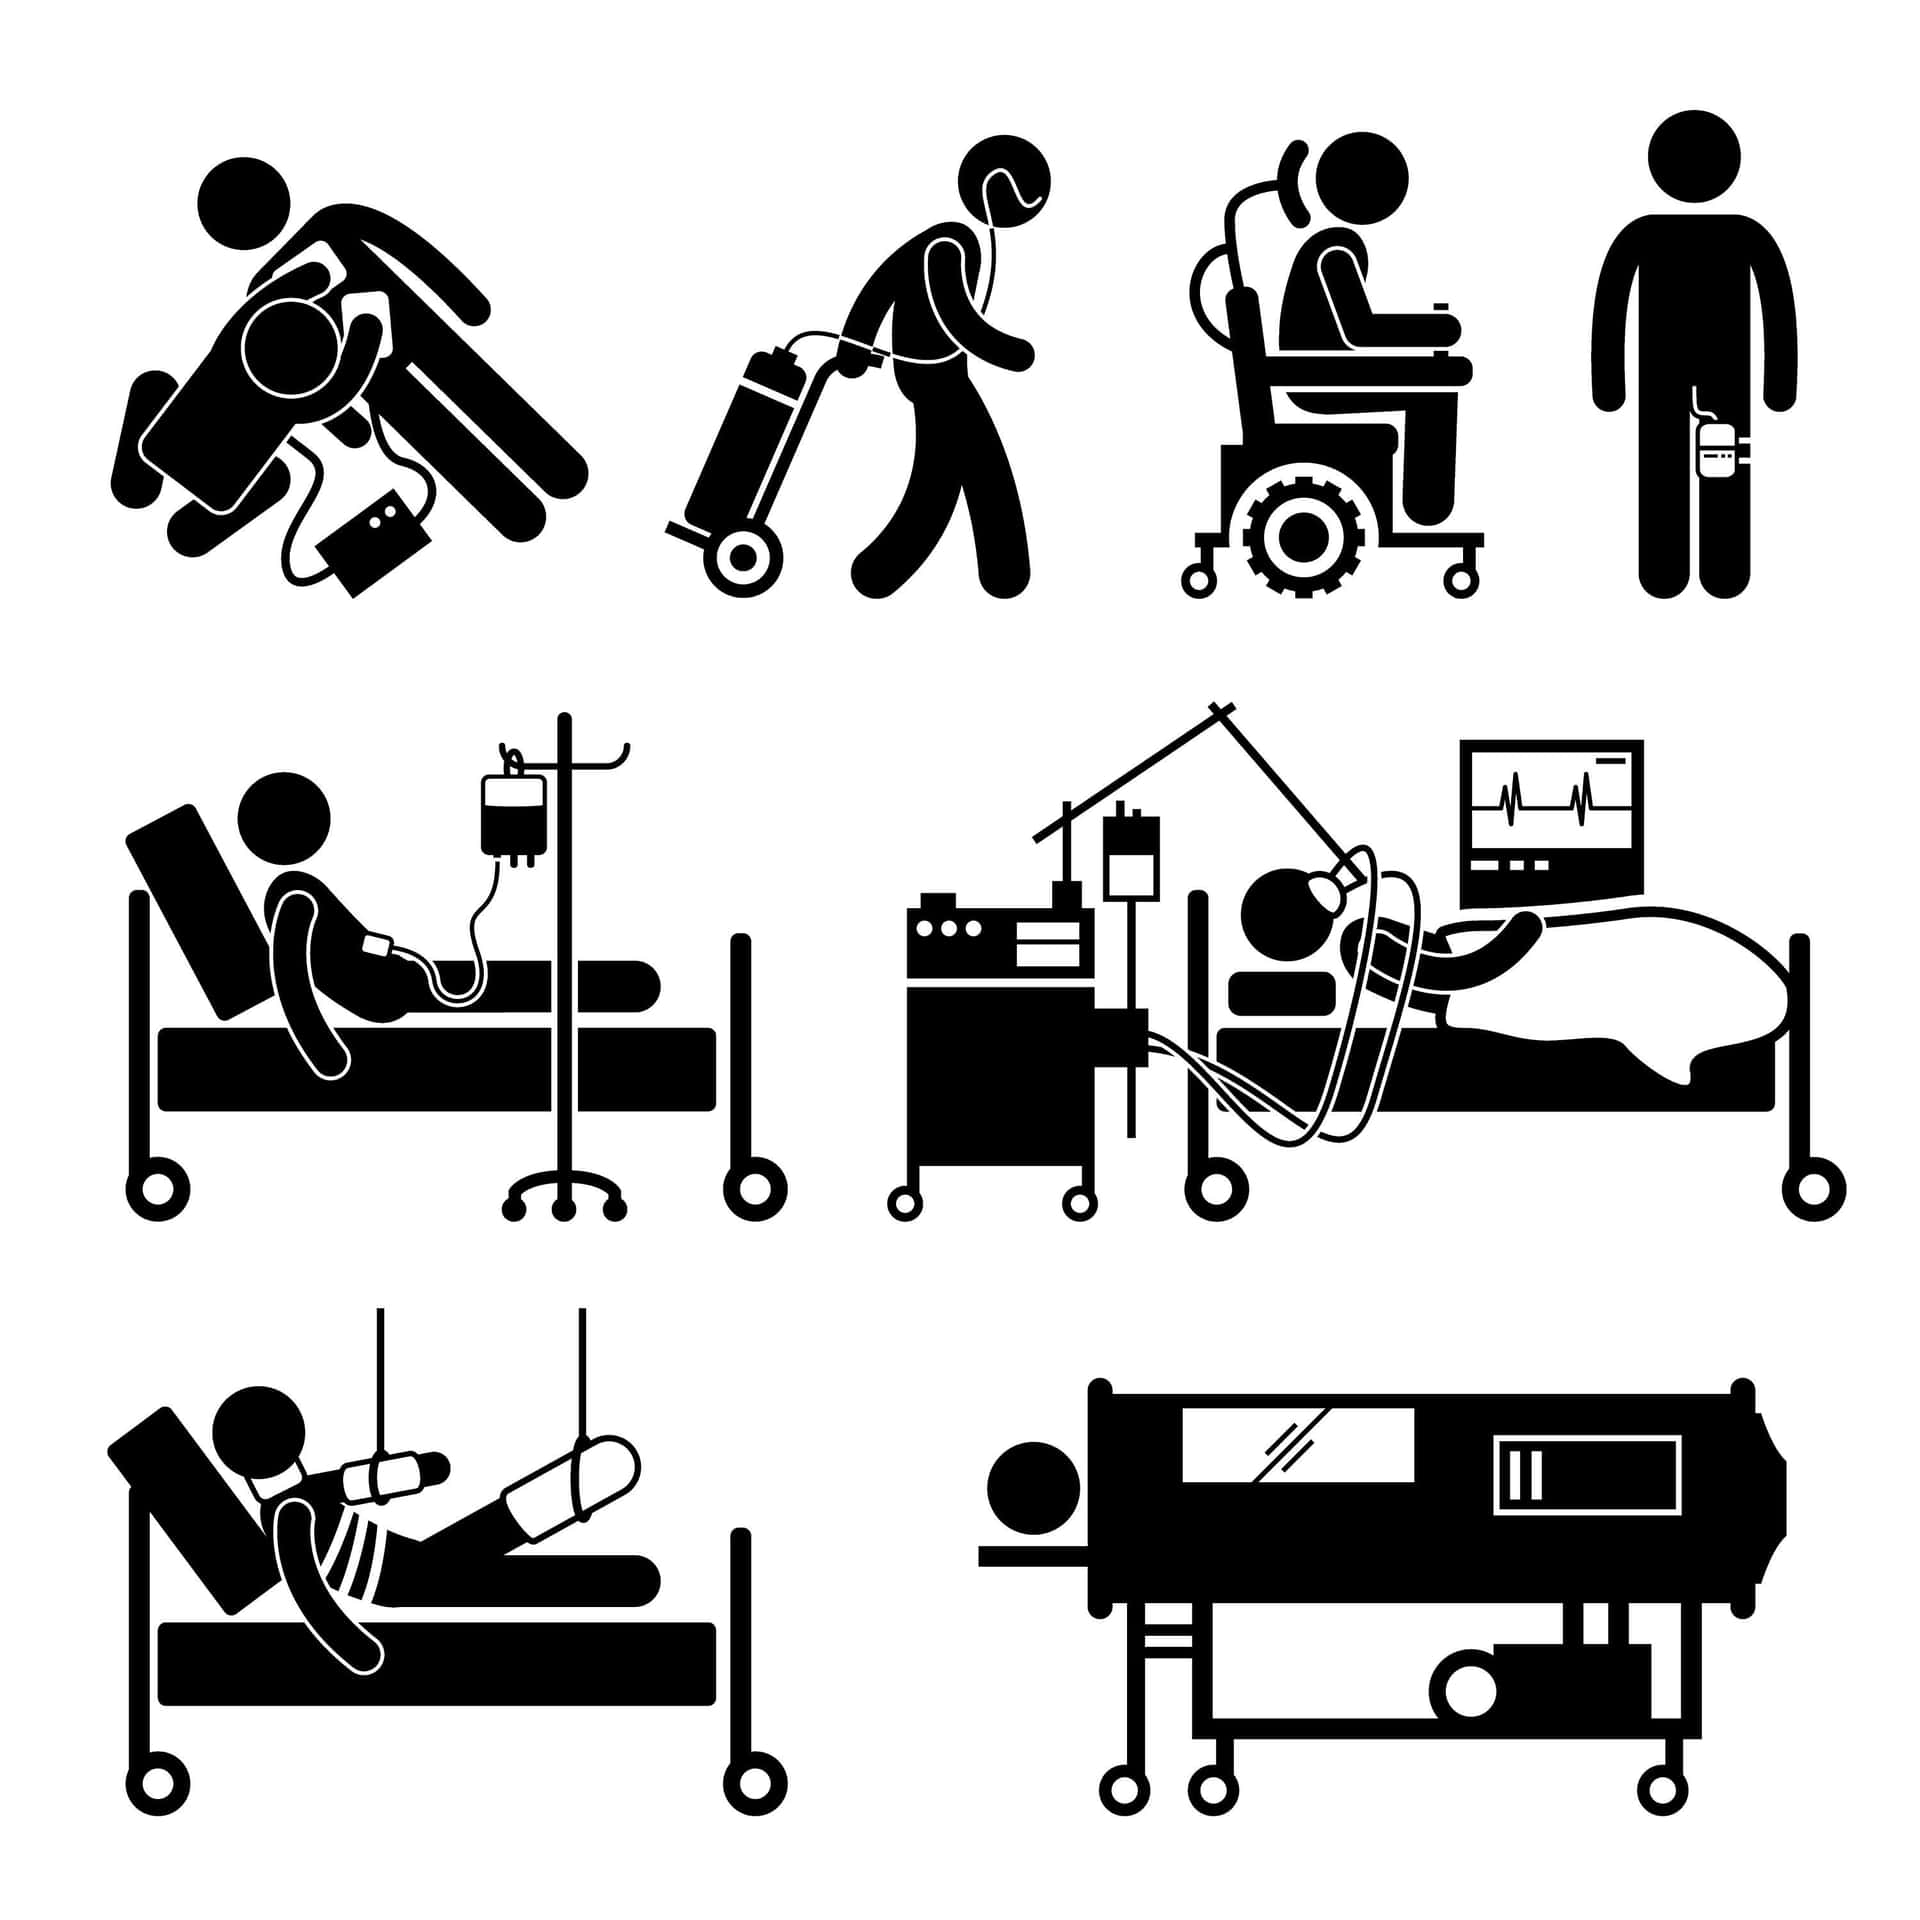 Krankenhaussymbolemit Personen Im Bett